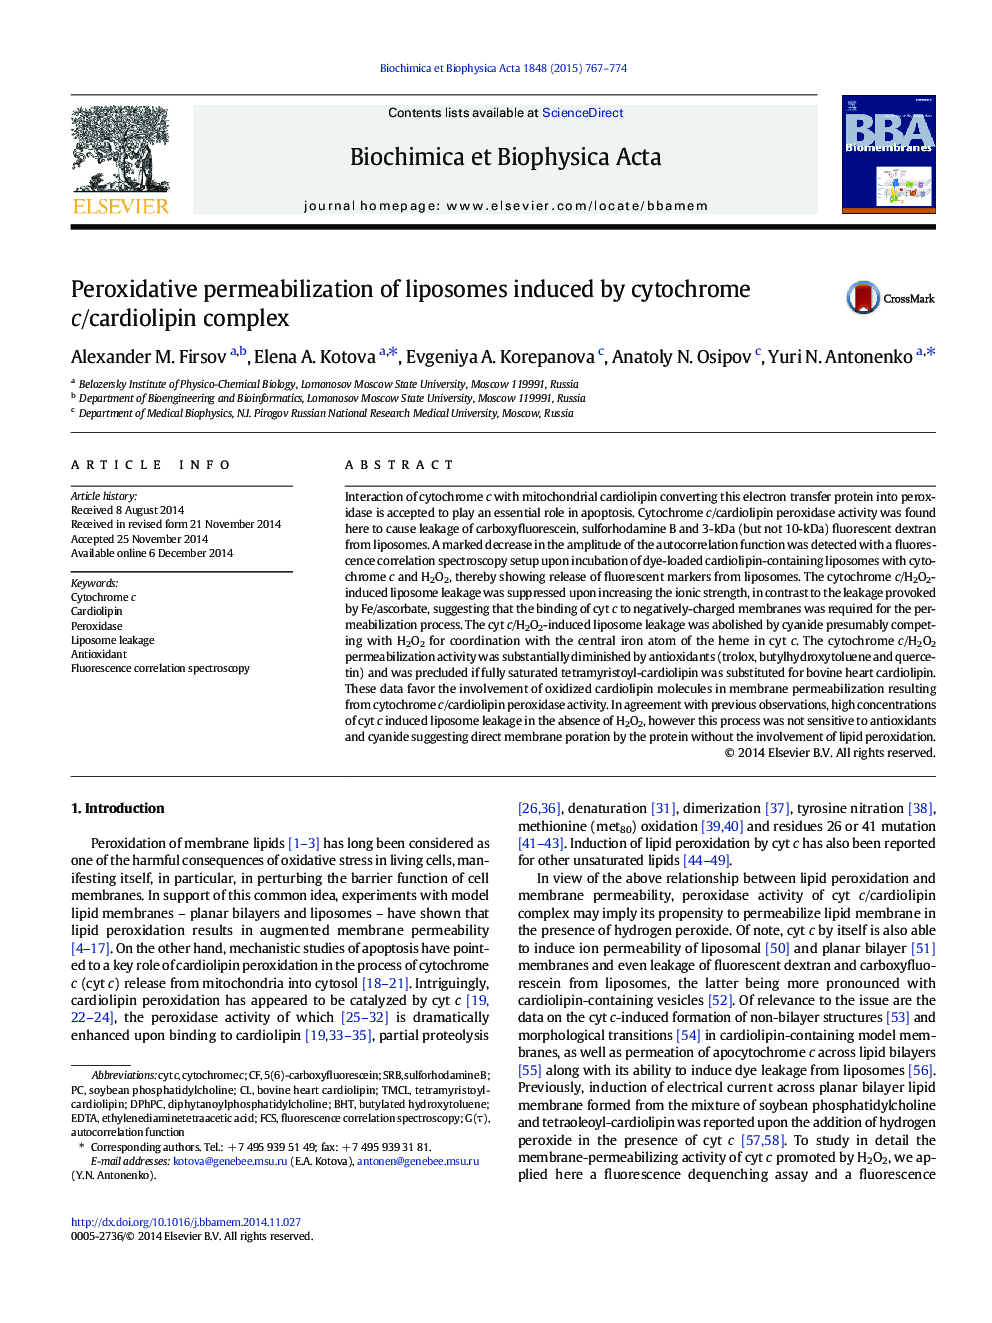 Peroxidative permeabilization of liposomes induced by cytochrome c/cardiolipin complex